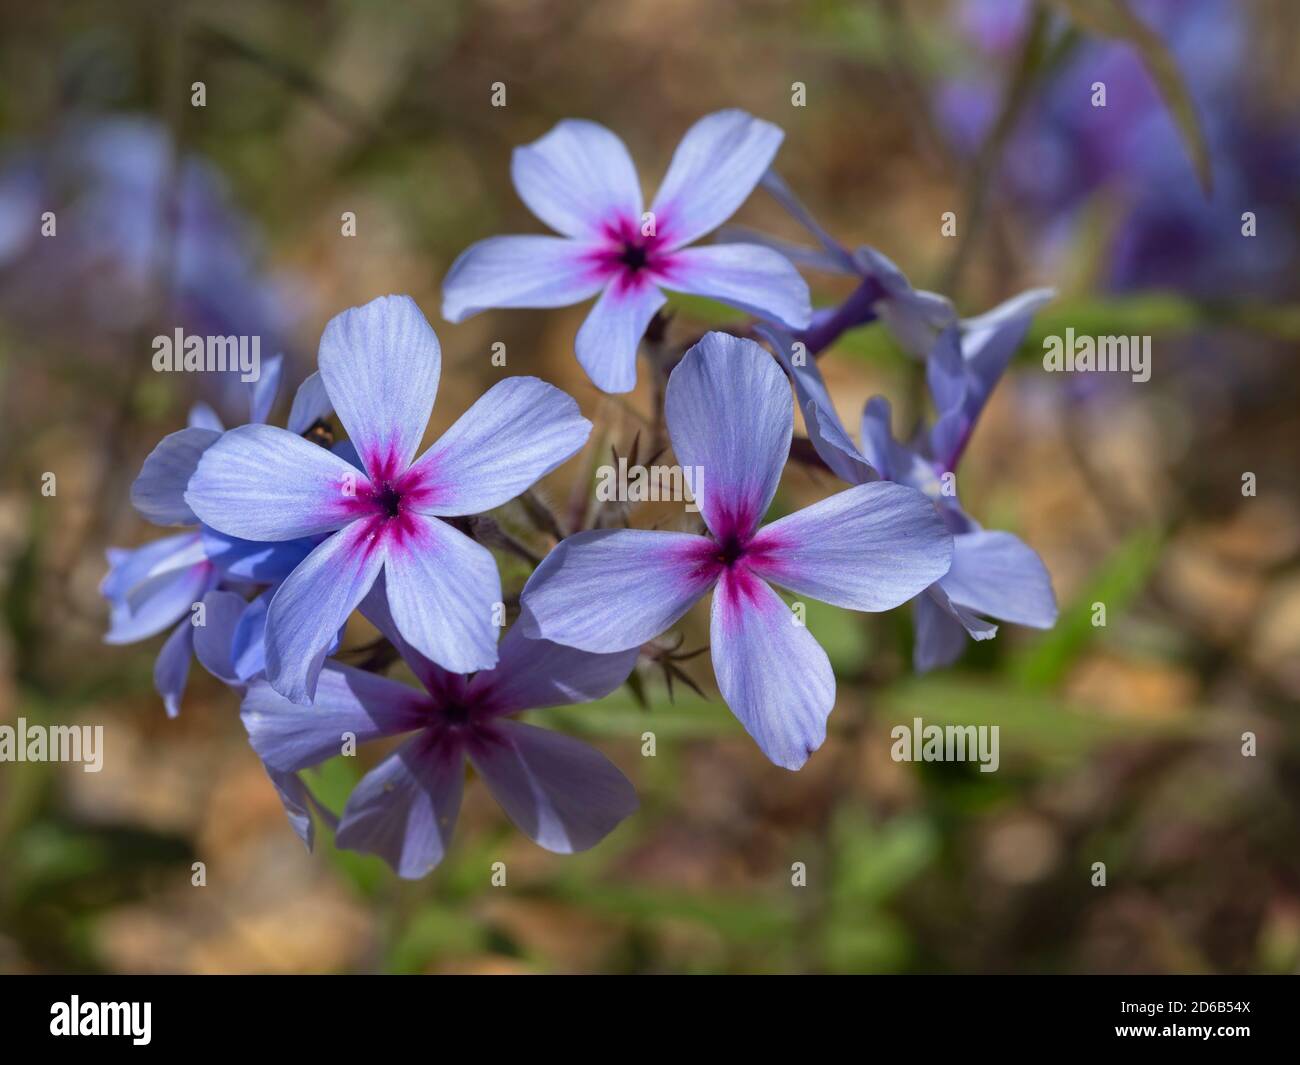 Closeup of pretty purple creeping phlox flowers in a garden Stock Photo